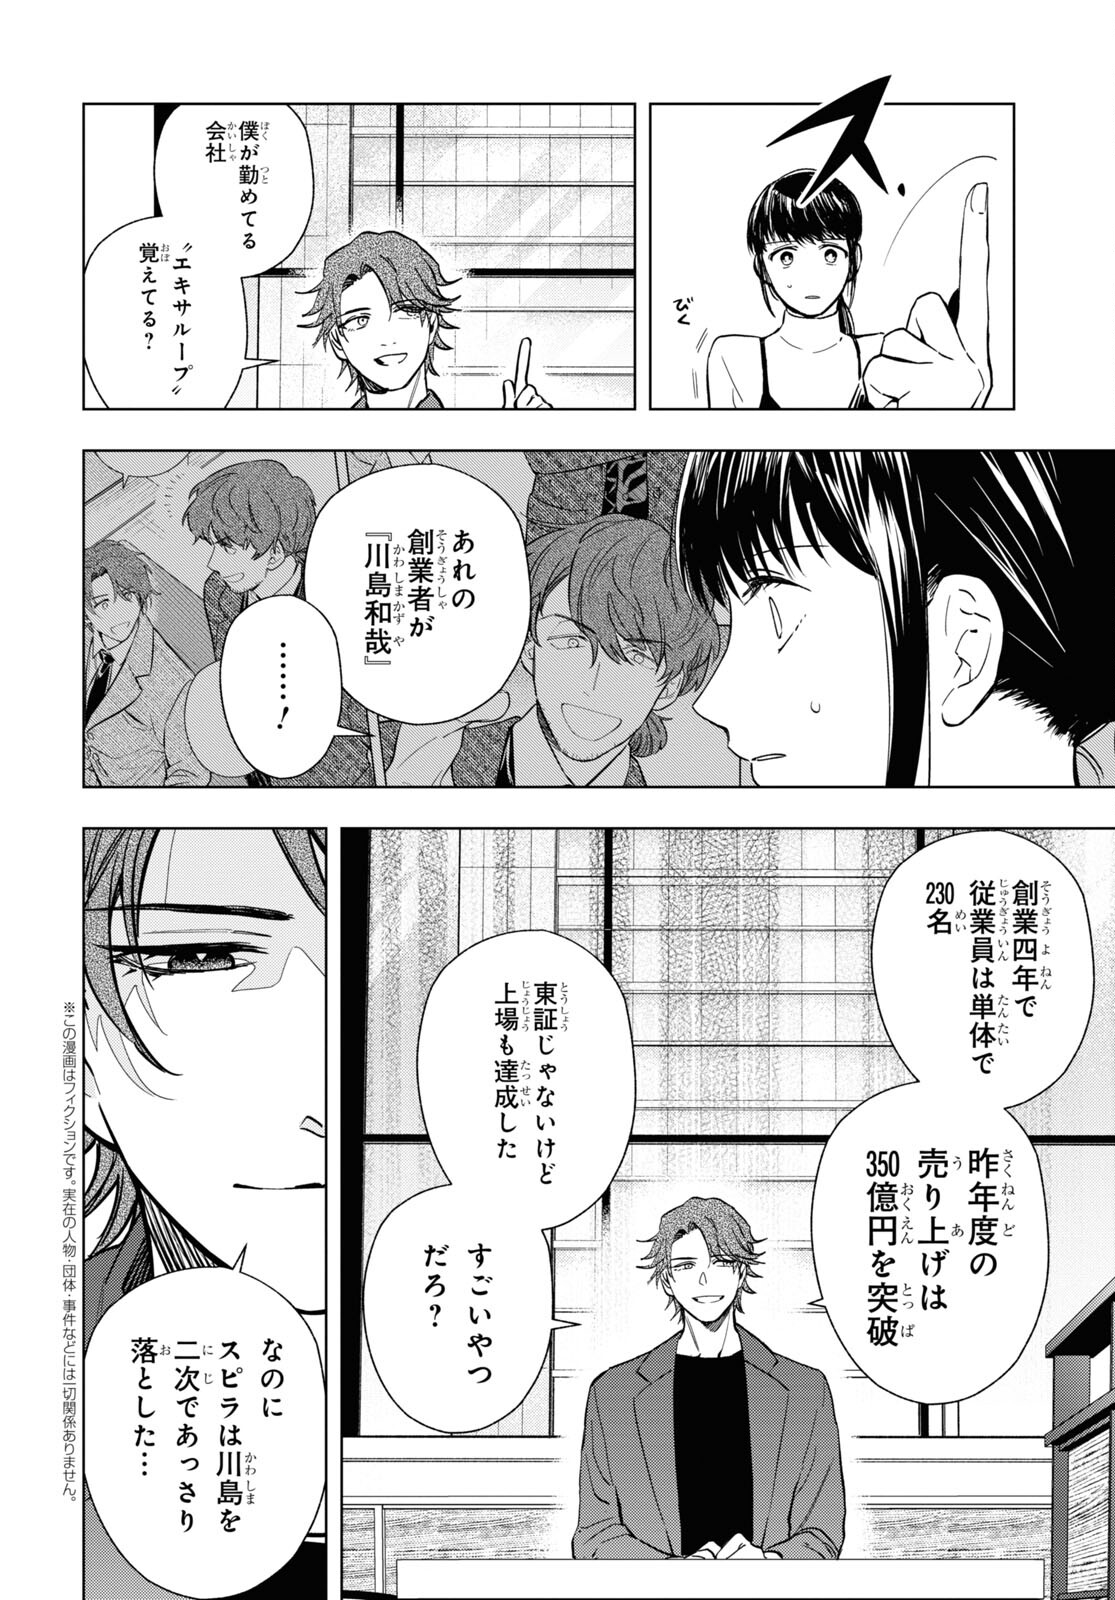 Rokunin no Usotsuki na Daigakusei (Plus 1) - Chapter 14 - Page 4